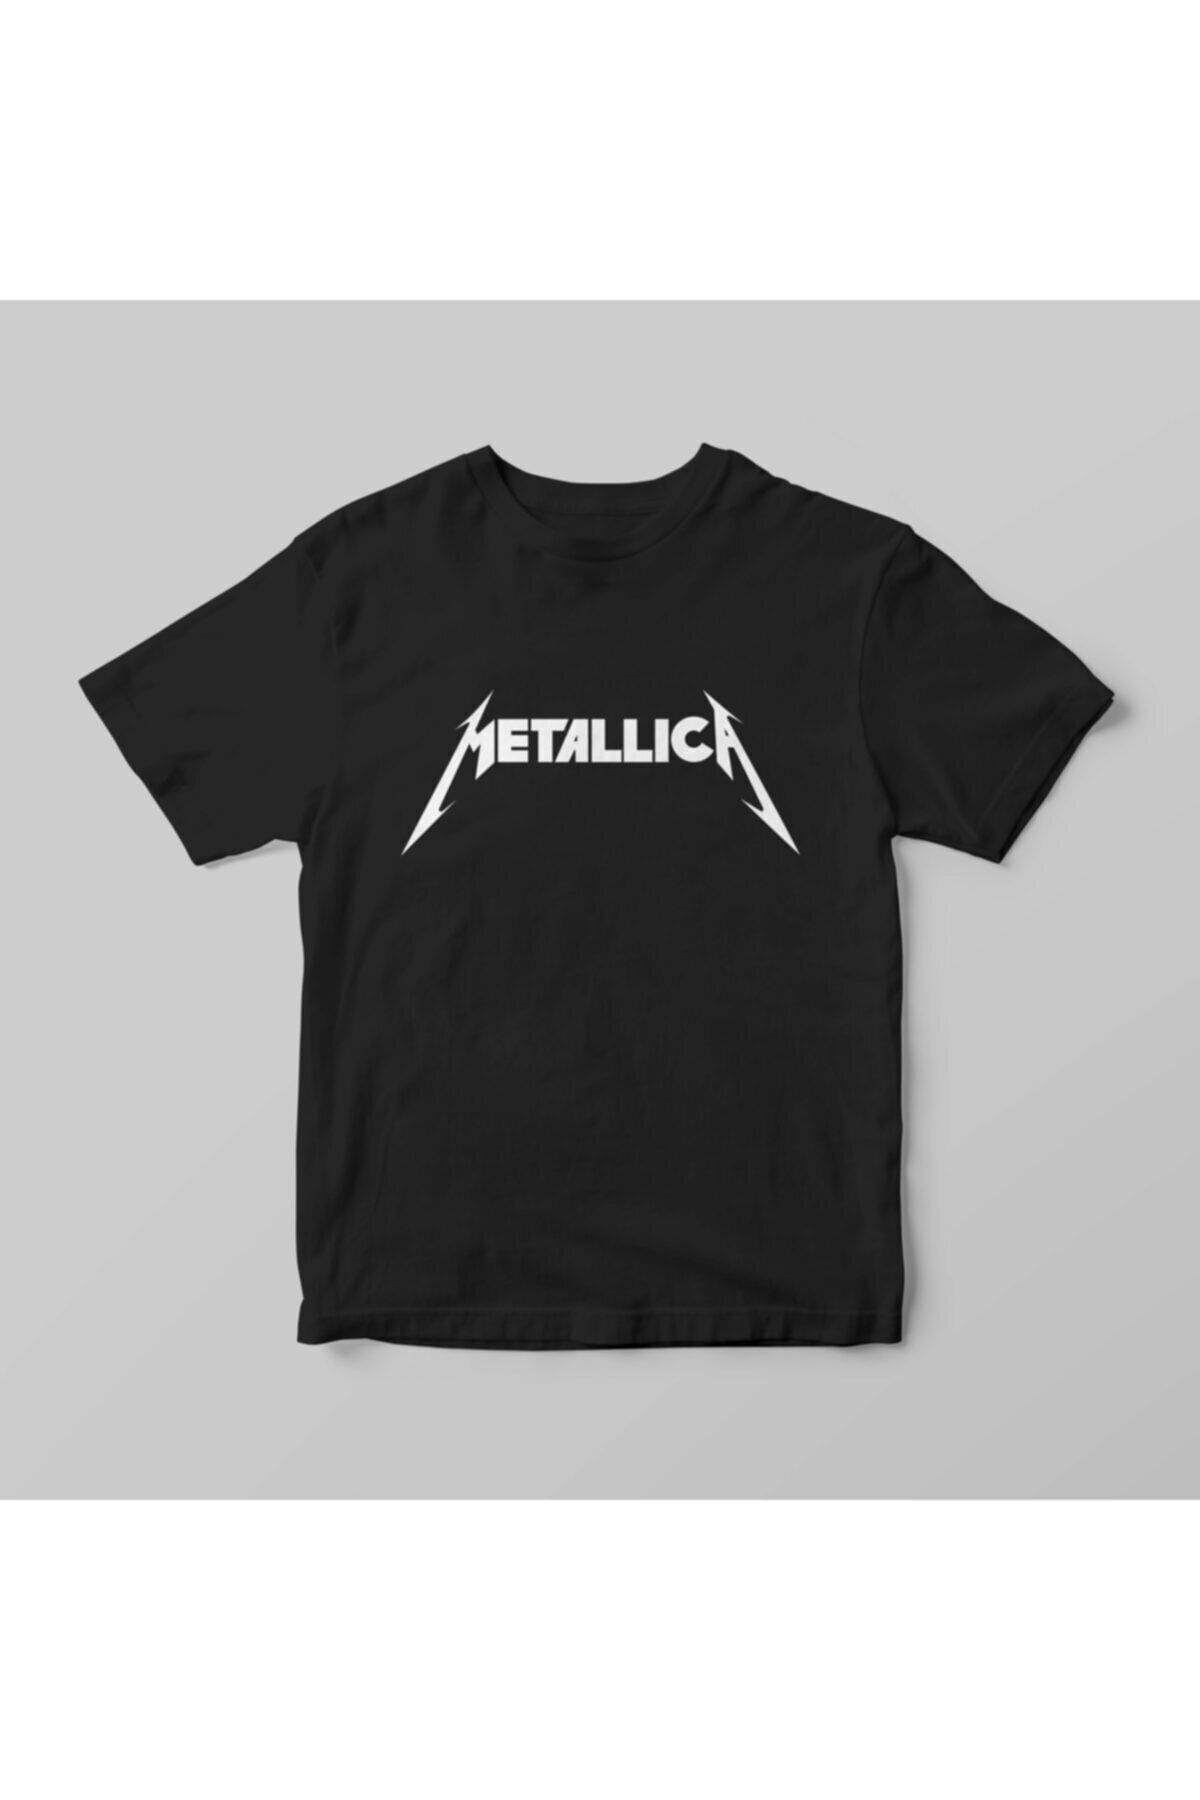 Marple's Unisex Siyah Metallica Tshirt